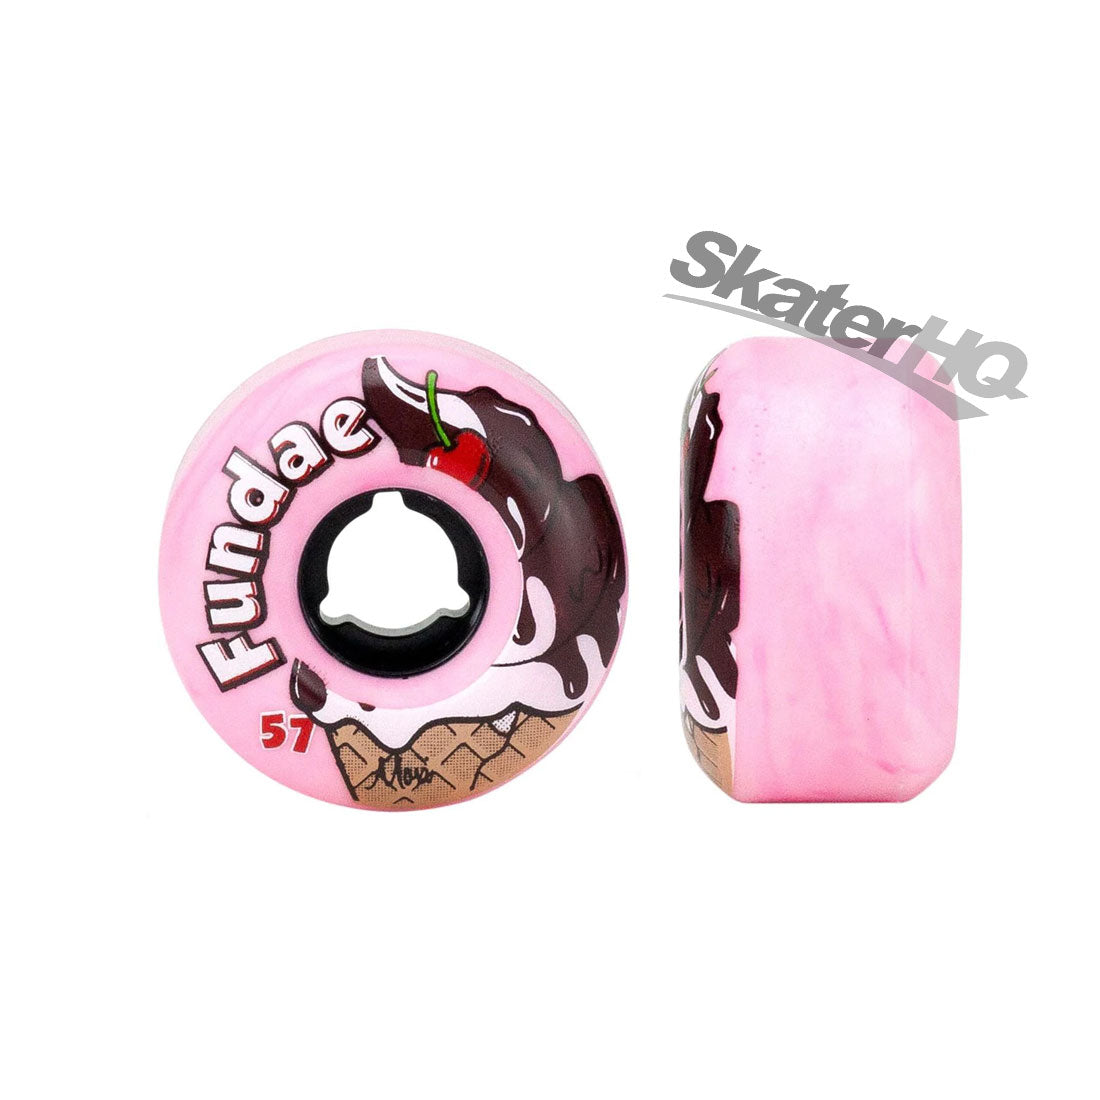 Moxi Fundae Hybrid 57x34mm 85a 4pk - Bubble Gum Pink Roller Skate Wheels